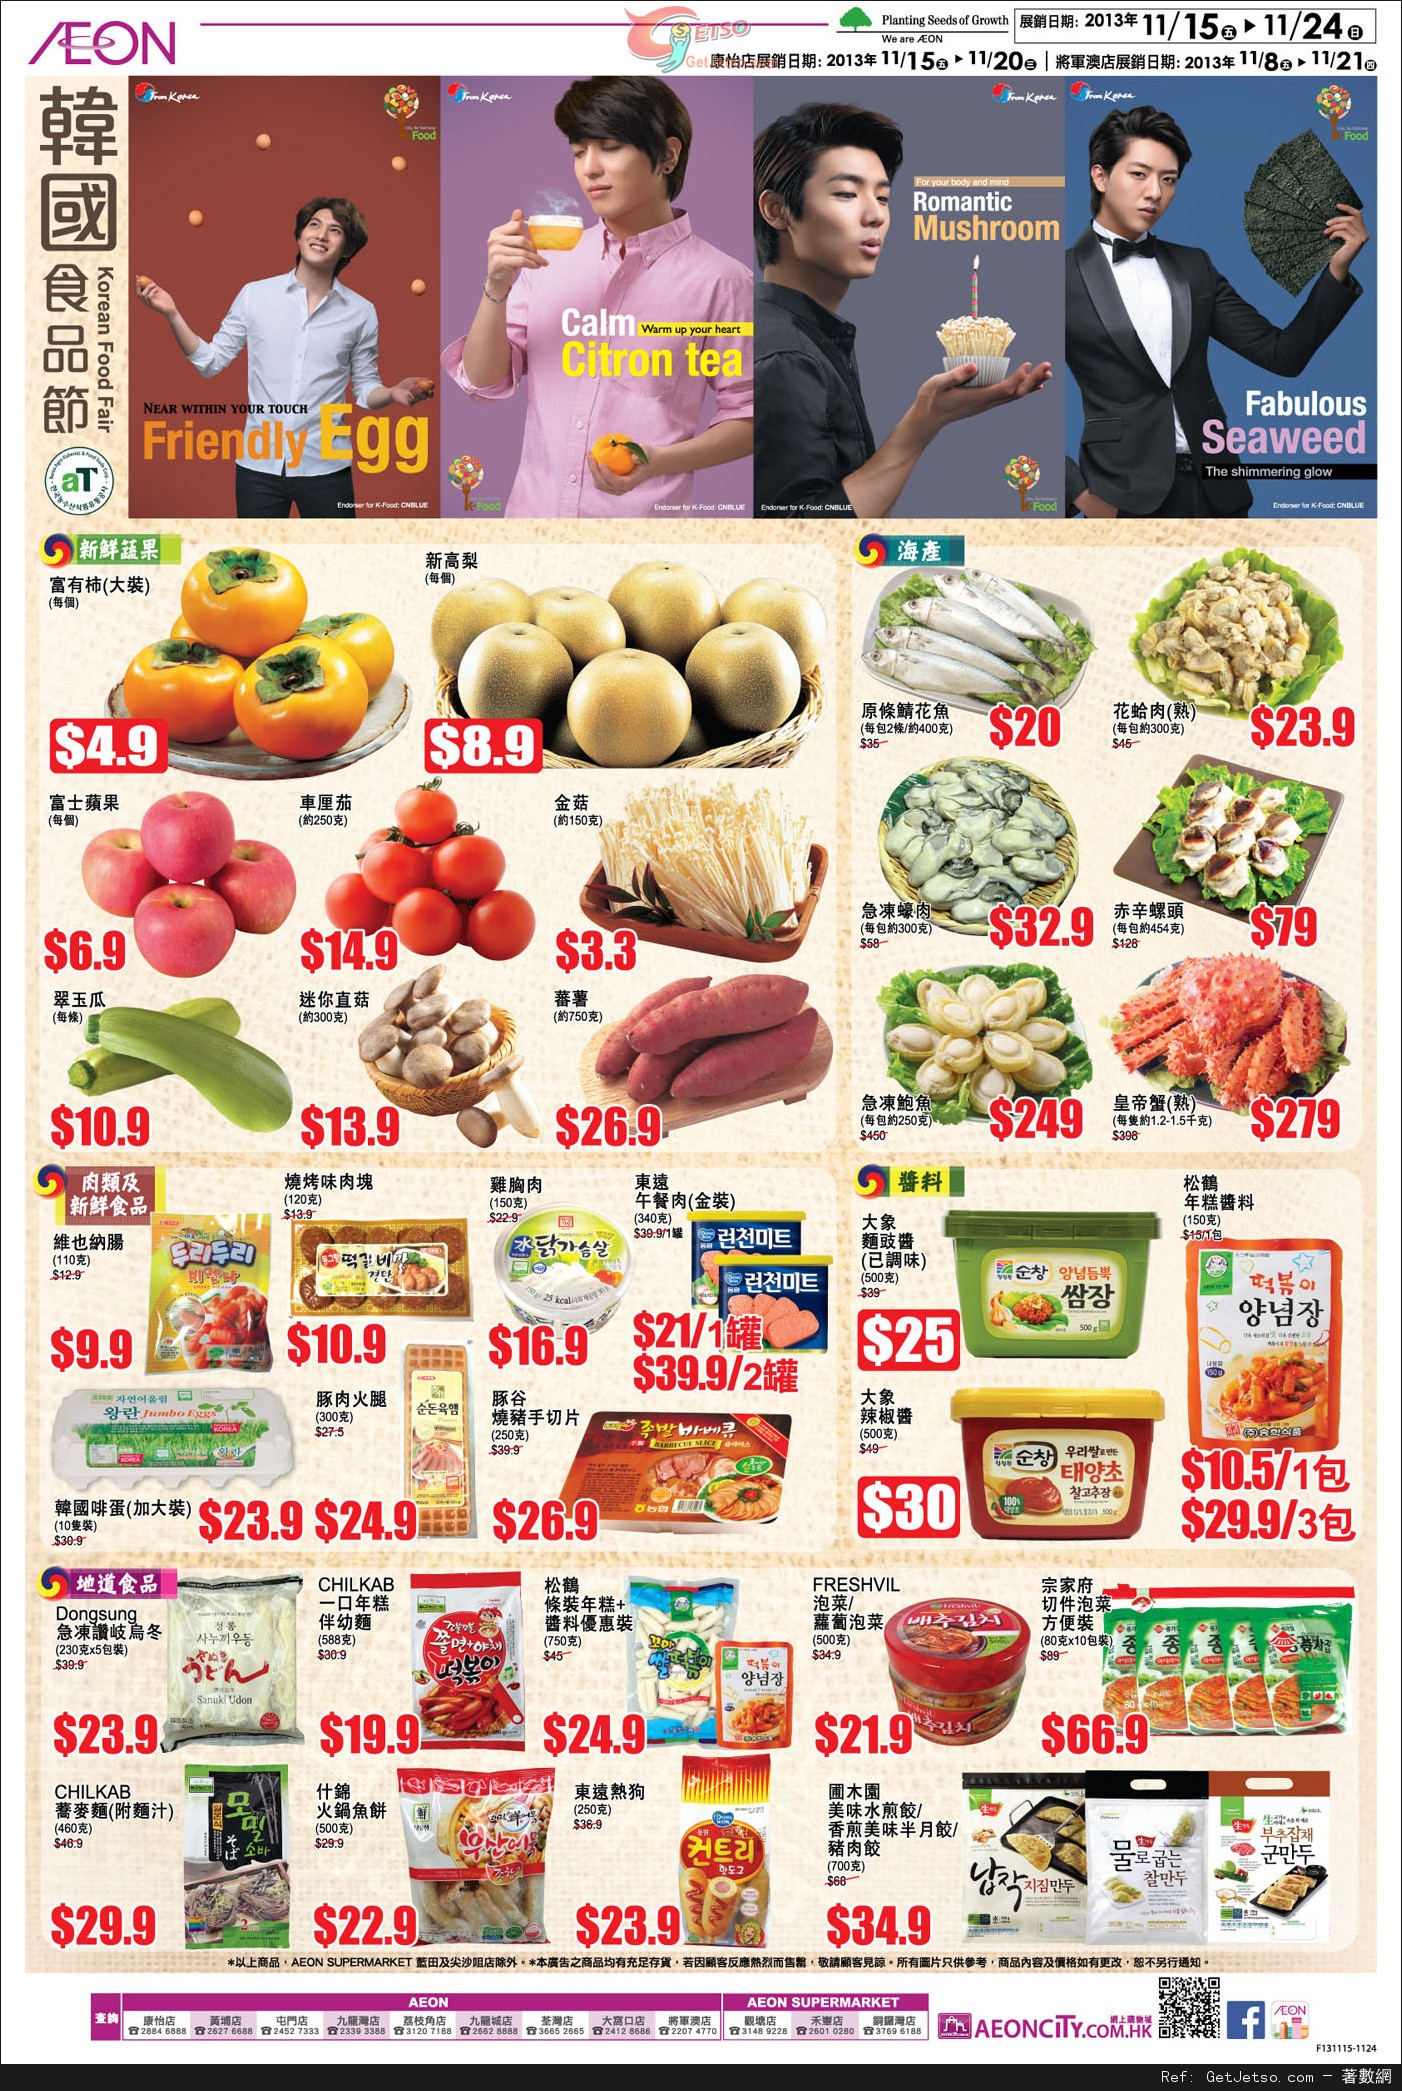 AEON 韓國食品節購物優惠(至13年11月24日)圖片1